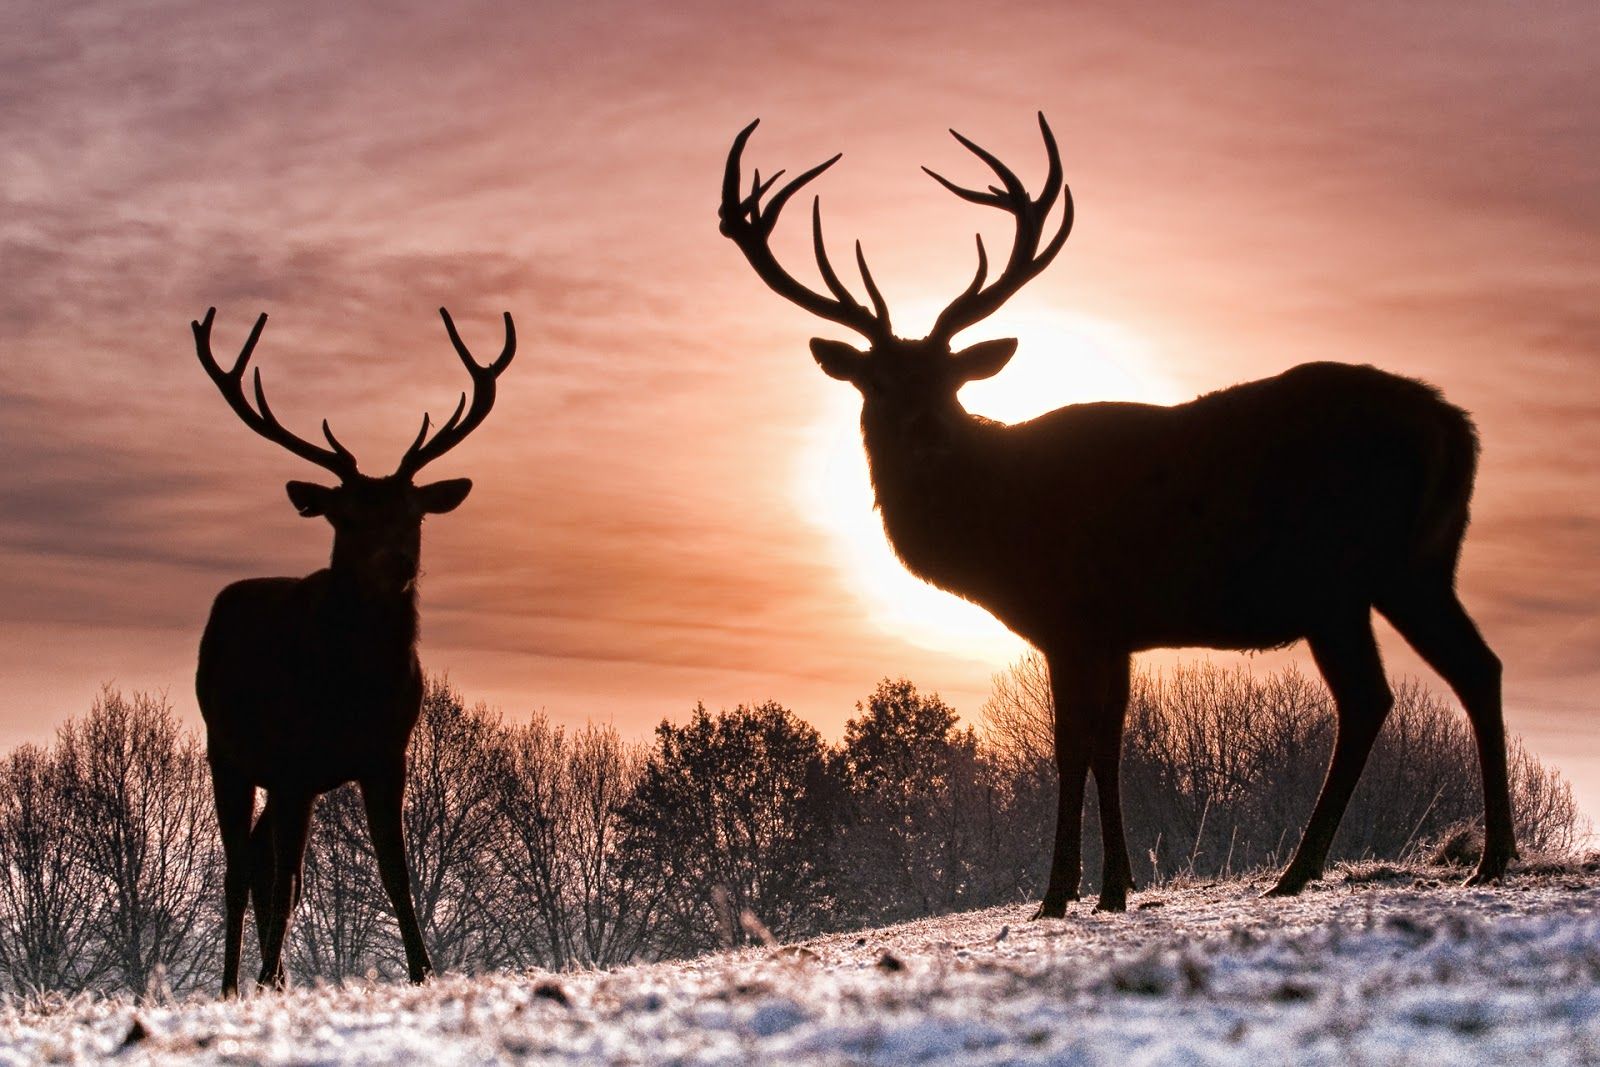 Two deer in the sunset - Deer